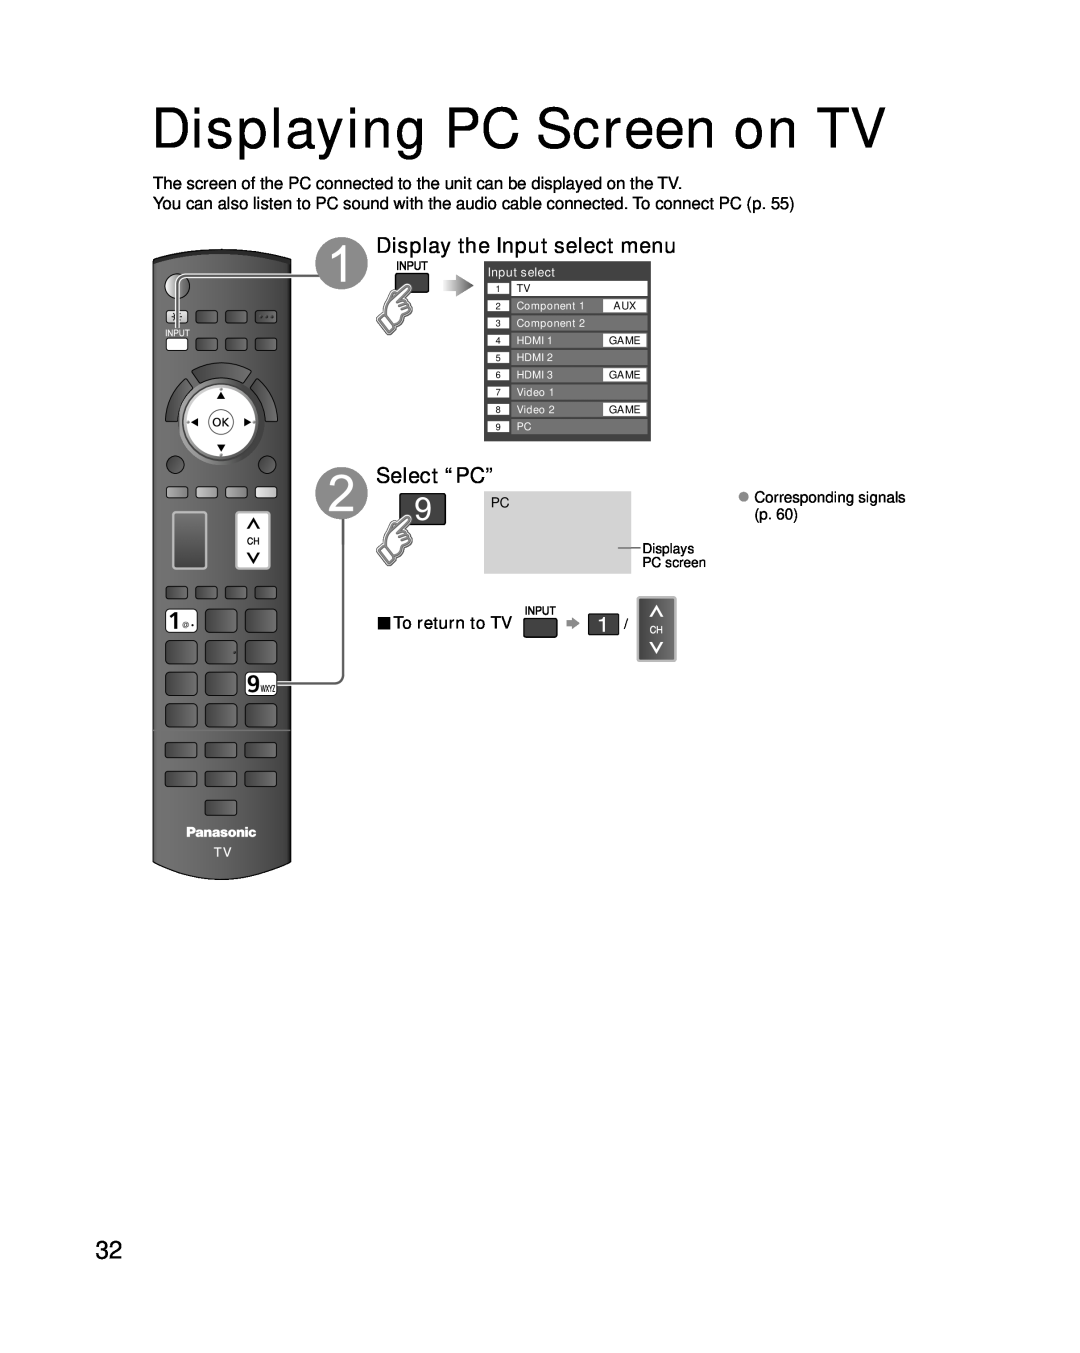 Panasonic TC-P54G10, TC-P50G10 Displaying PC Screen on TV, Display the Input select menu, Select “PC”, To return to TV 